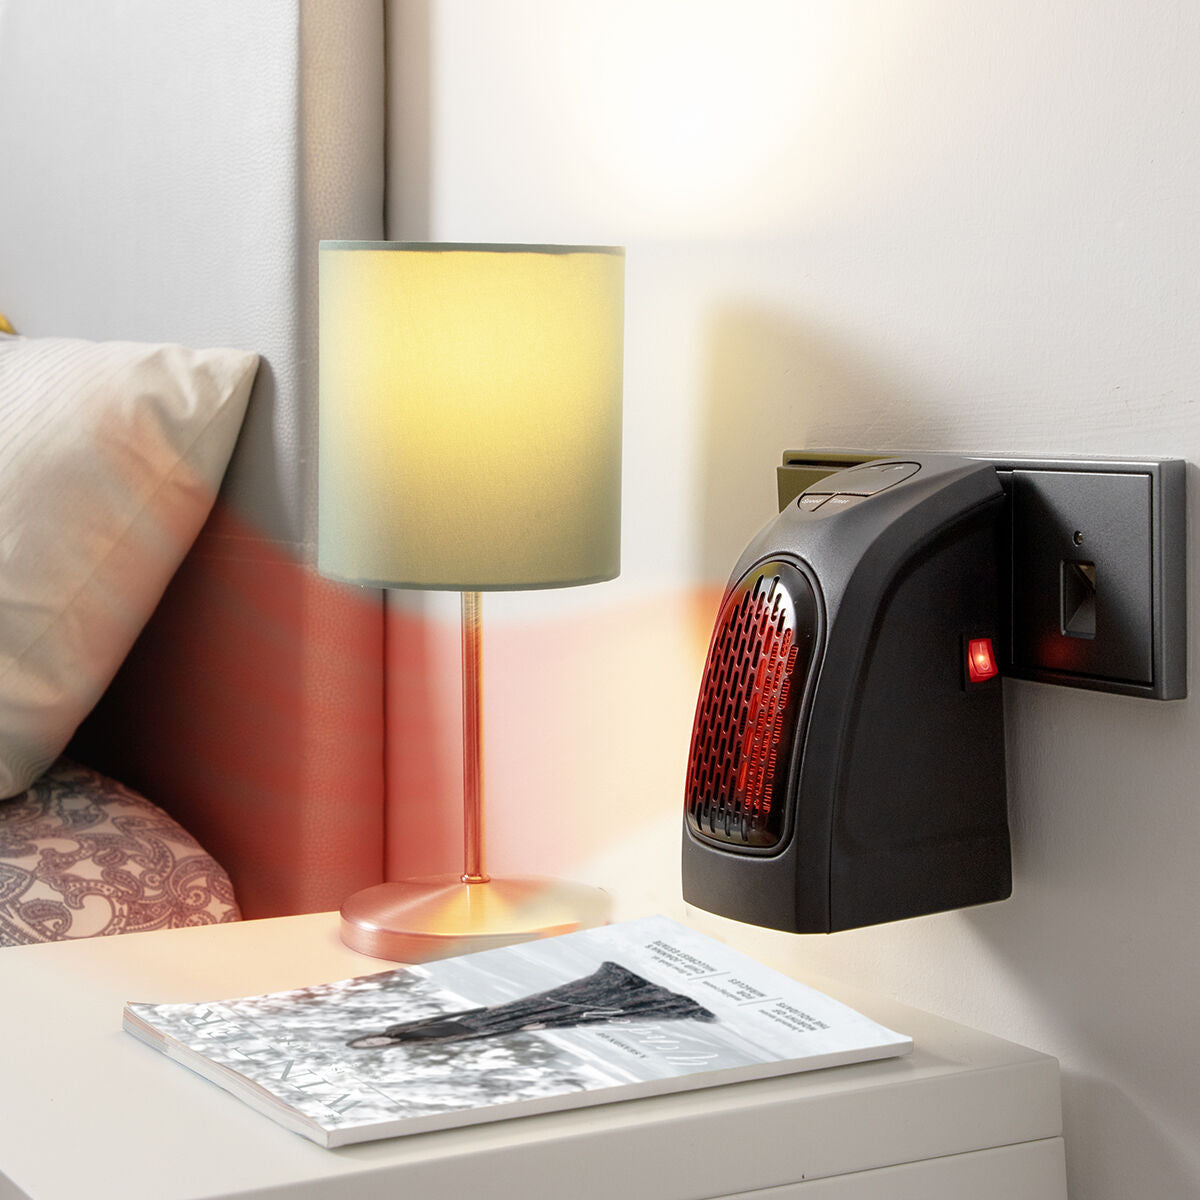 Plug-in Keramikheizkörper Heatpod InnovaGoods 400W Haus & Küche, Tragbare Klimageräte InnovaGoods   